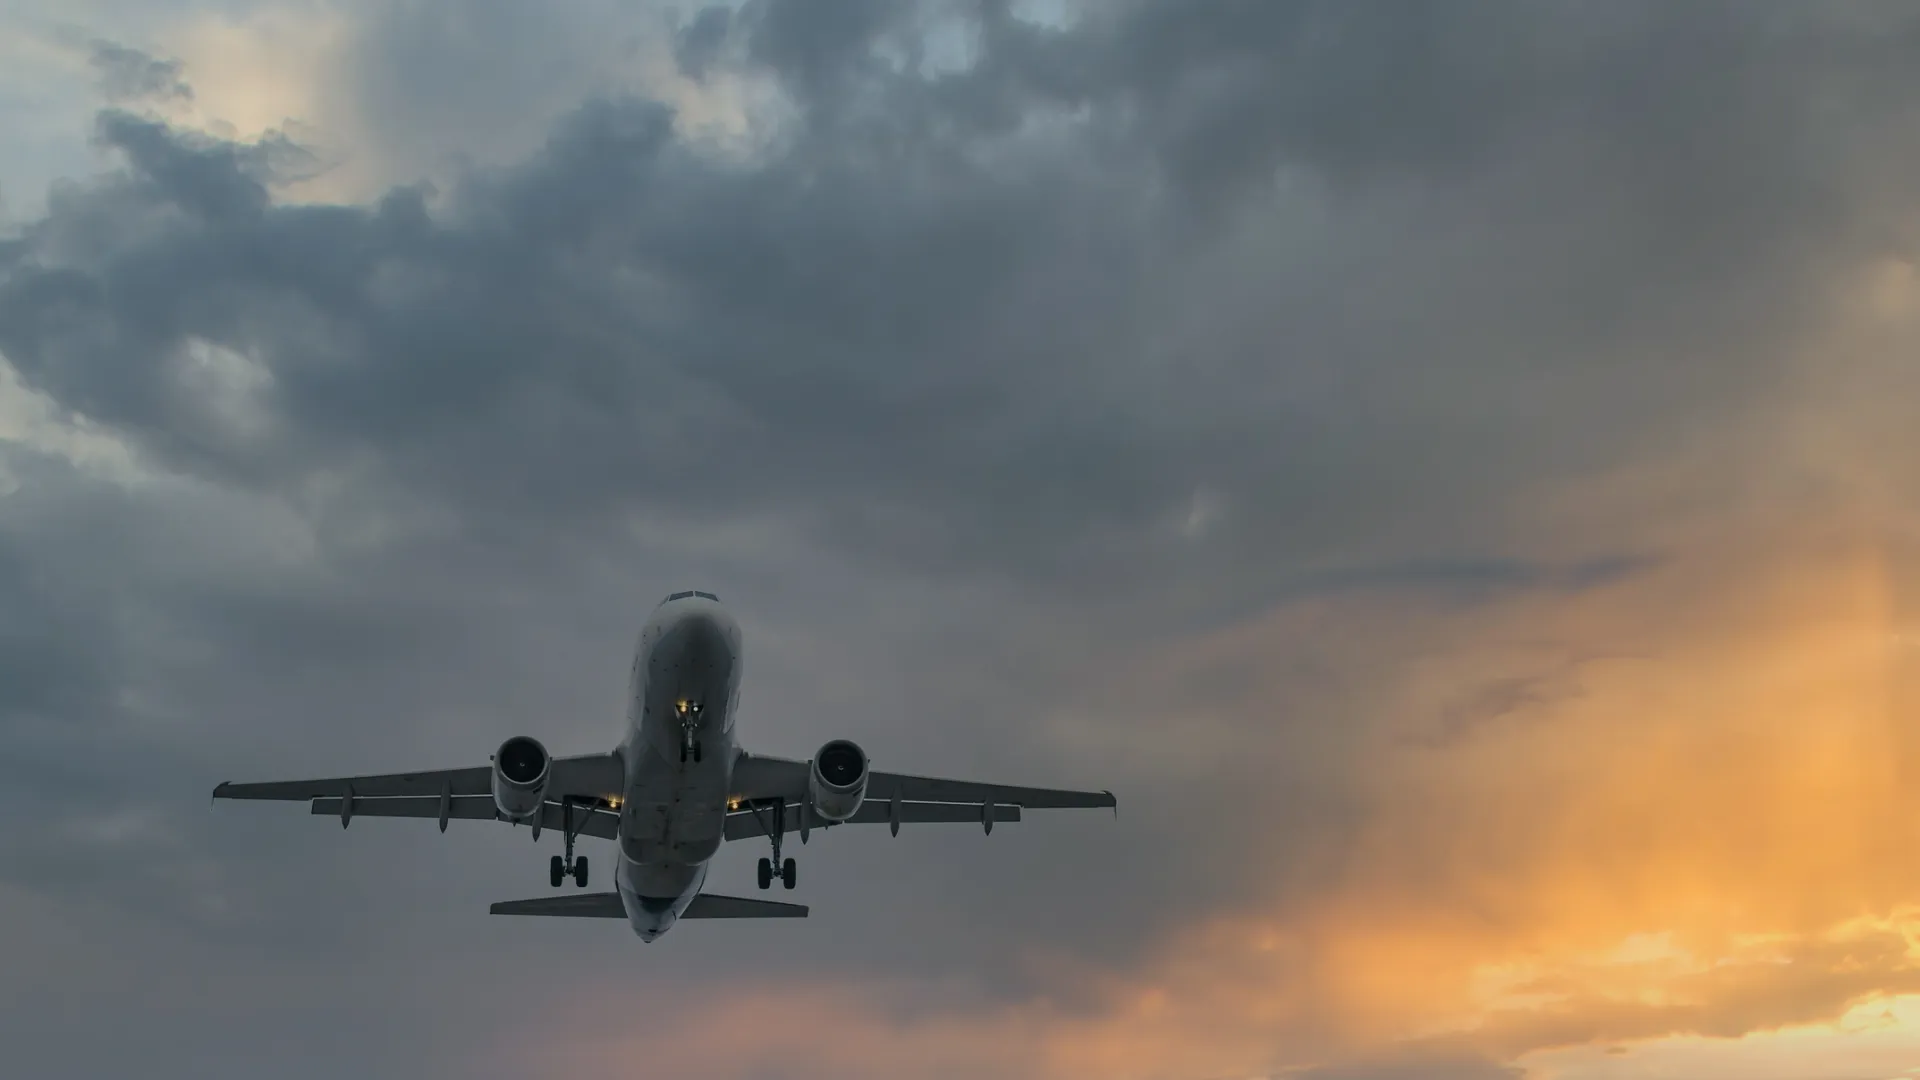 Самолет не стал менять курс. Фото:OlegRi/Shutterstock/Fotodom